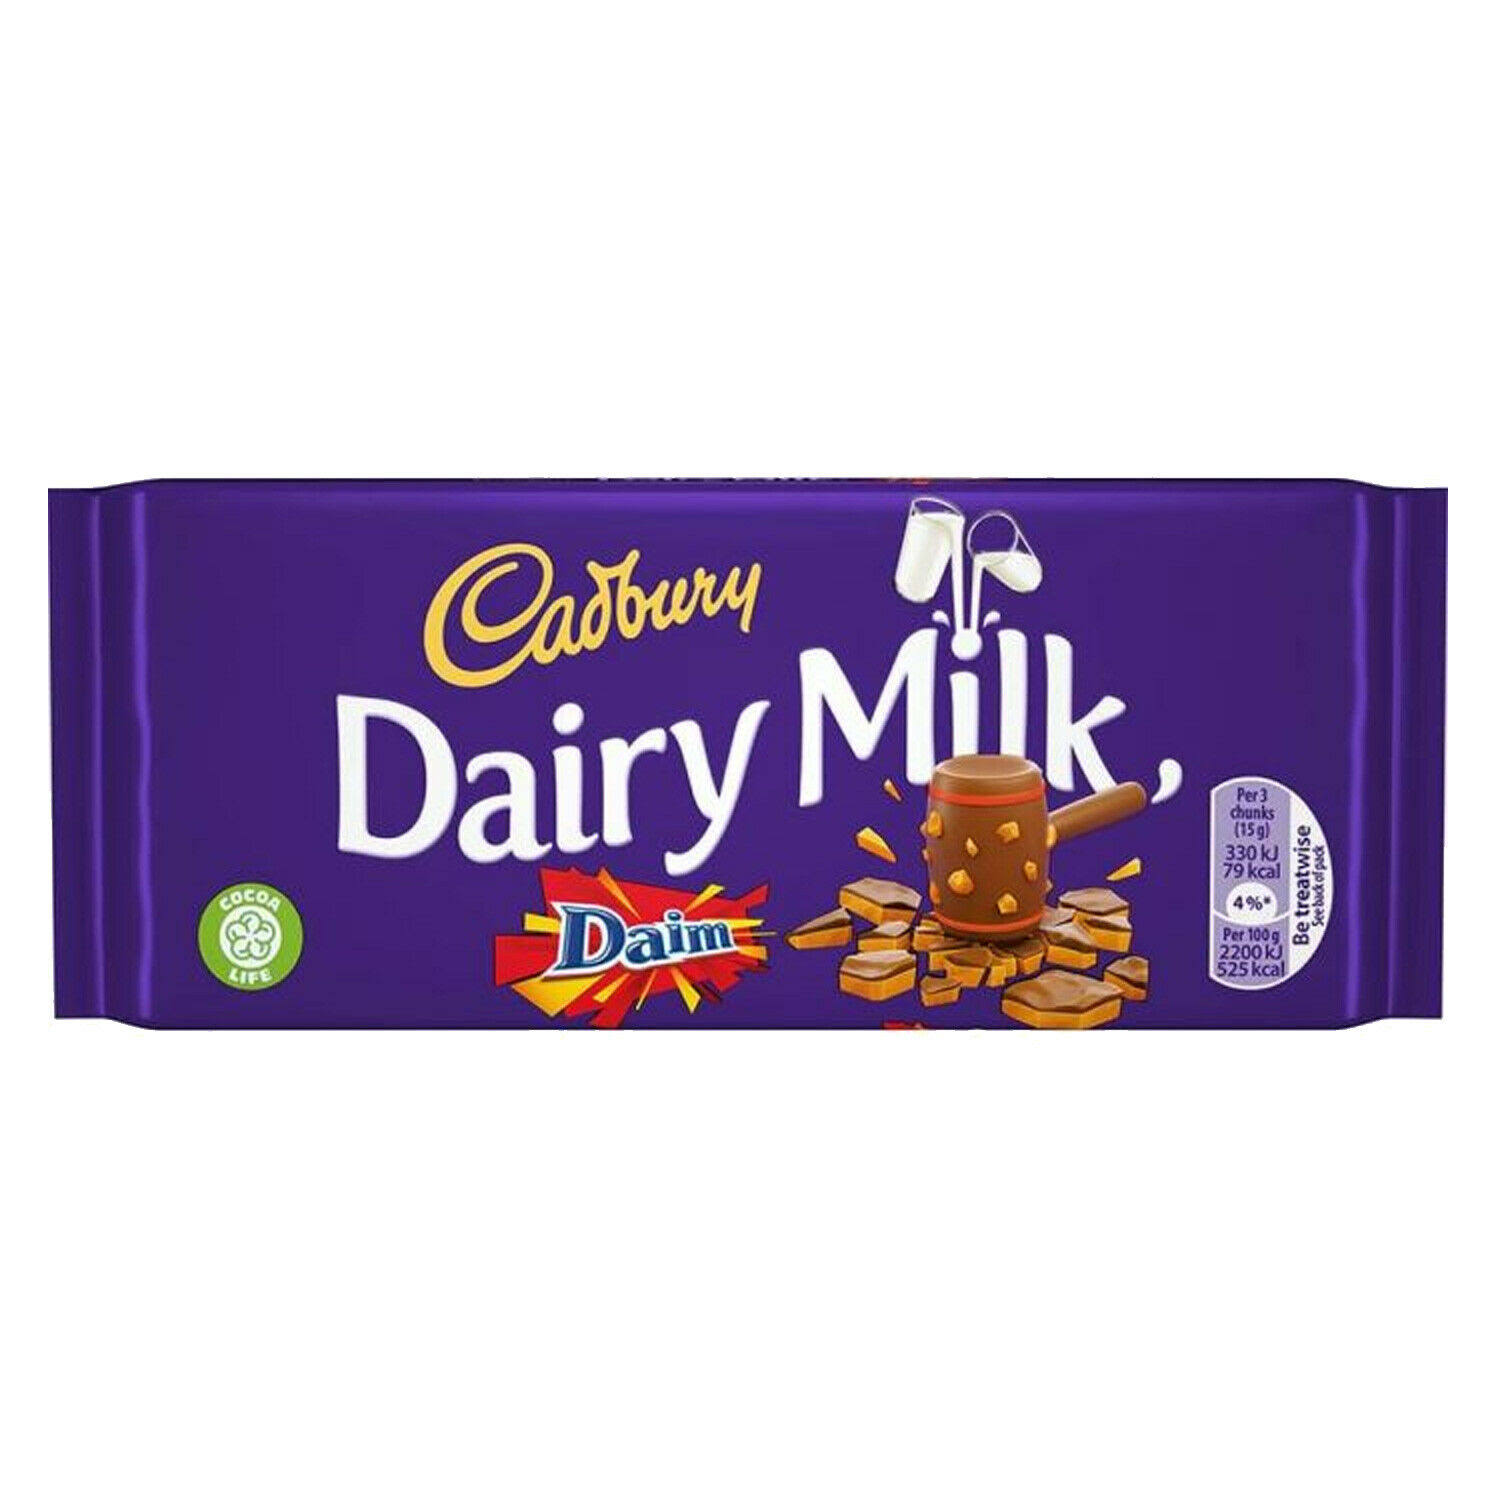 Cadbury Dairy Milk Chocolate Bar - with Daim, 120g